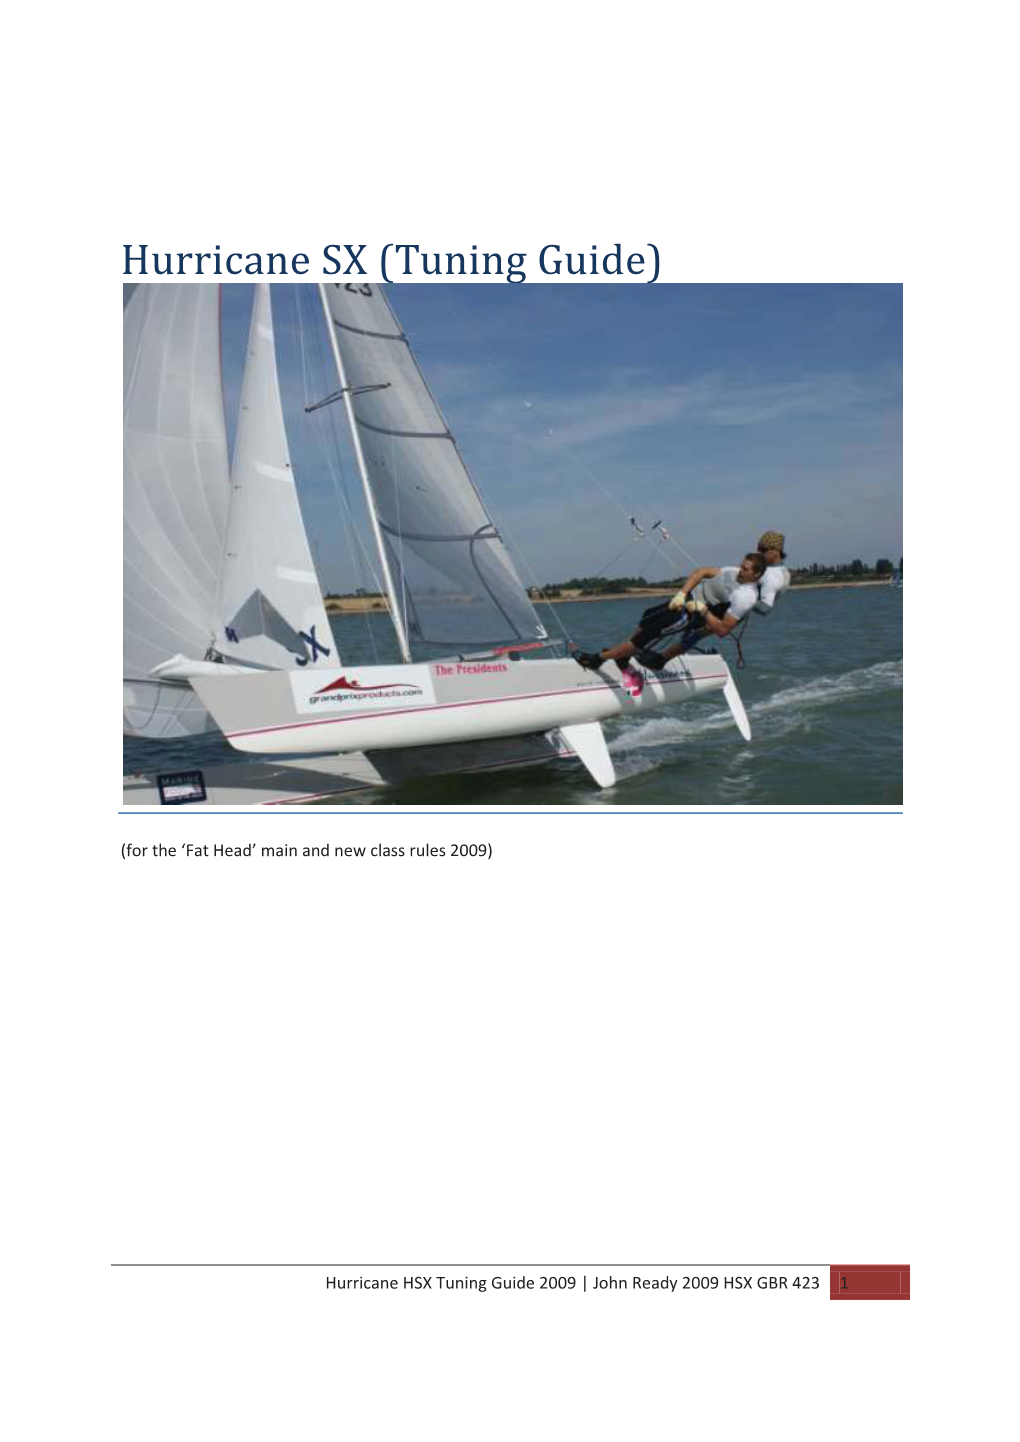 Hurricane SX Tuning Guide 2009